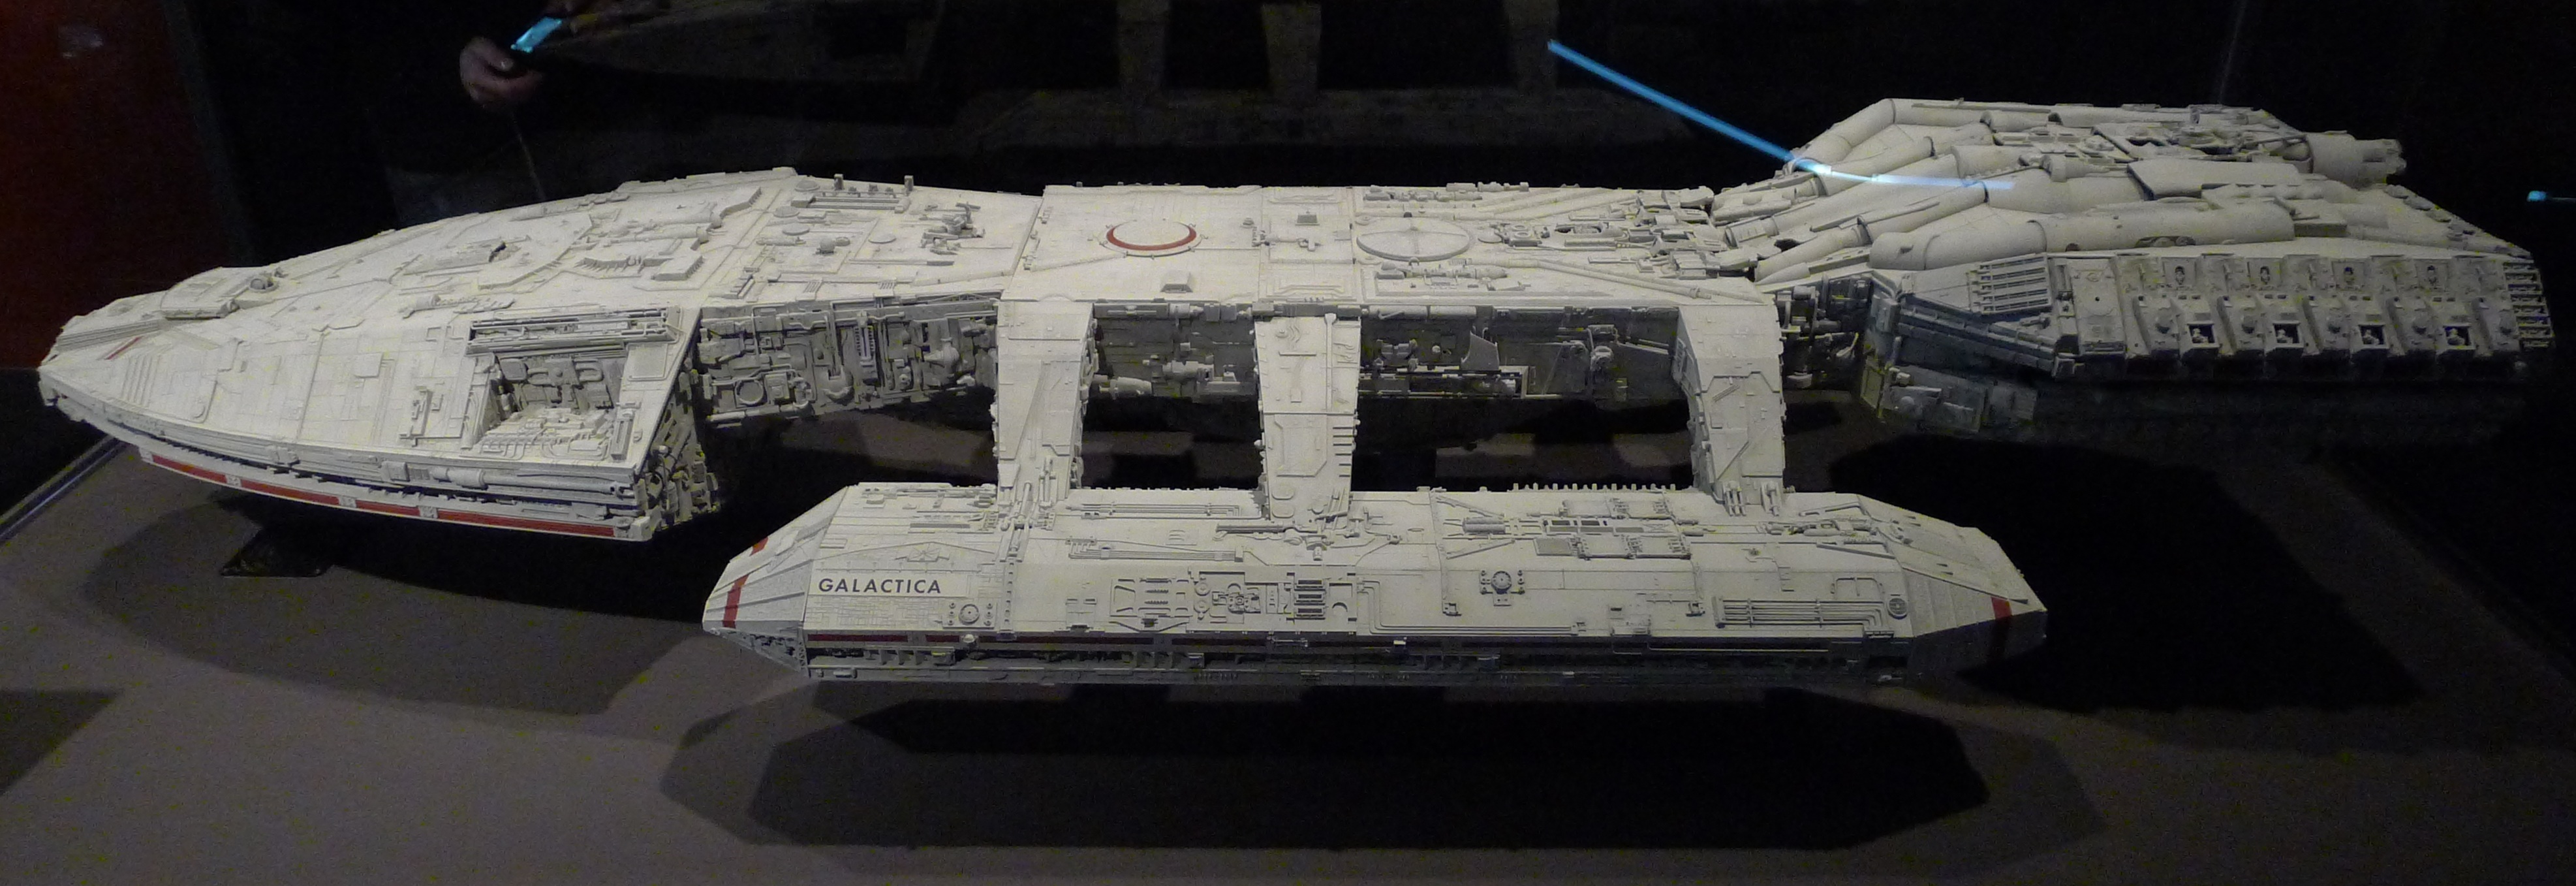 TOS Battlestar Galactica model pic